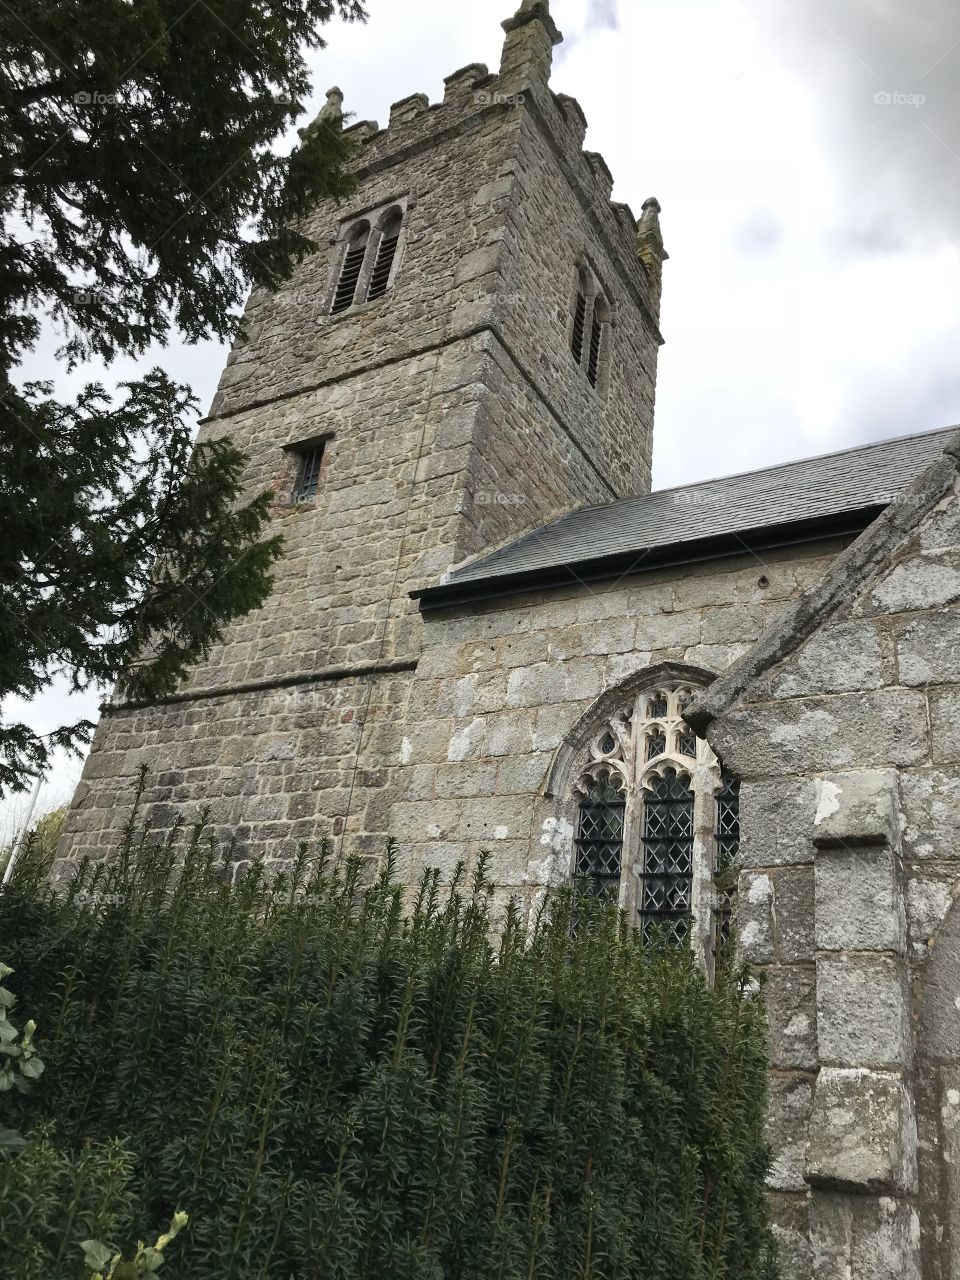 Bridford Church, Devon, has such distinction and presence.